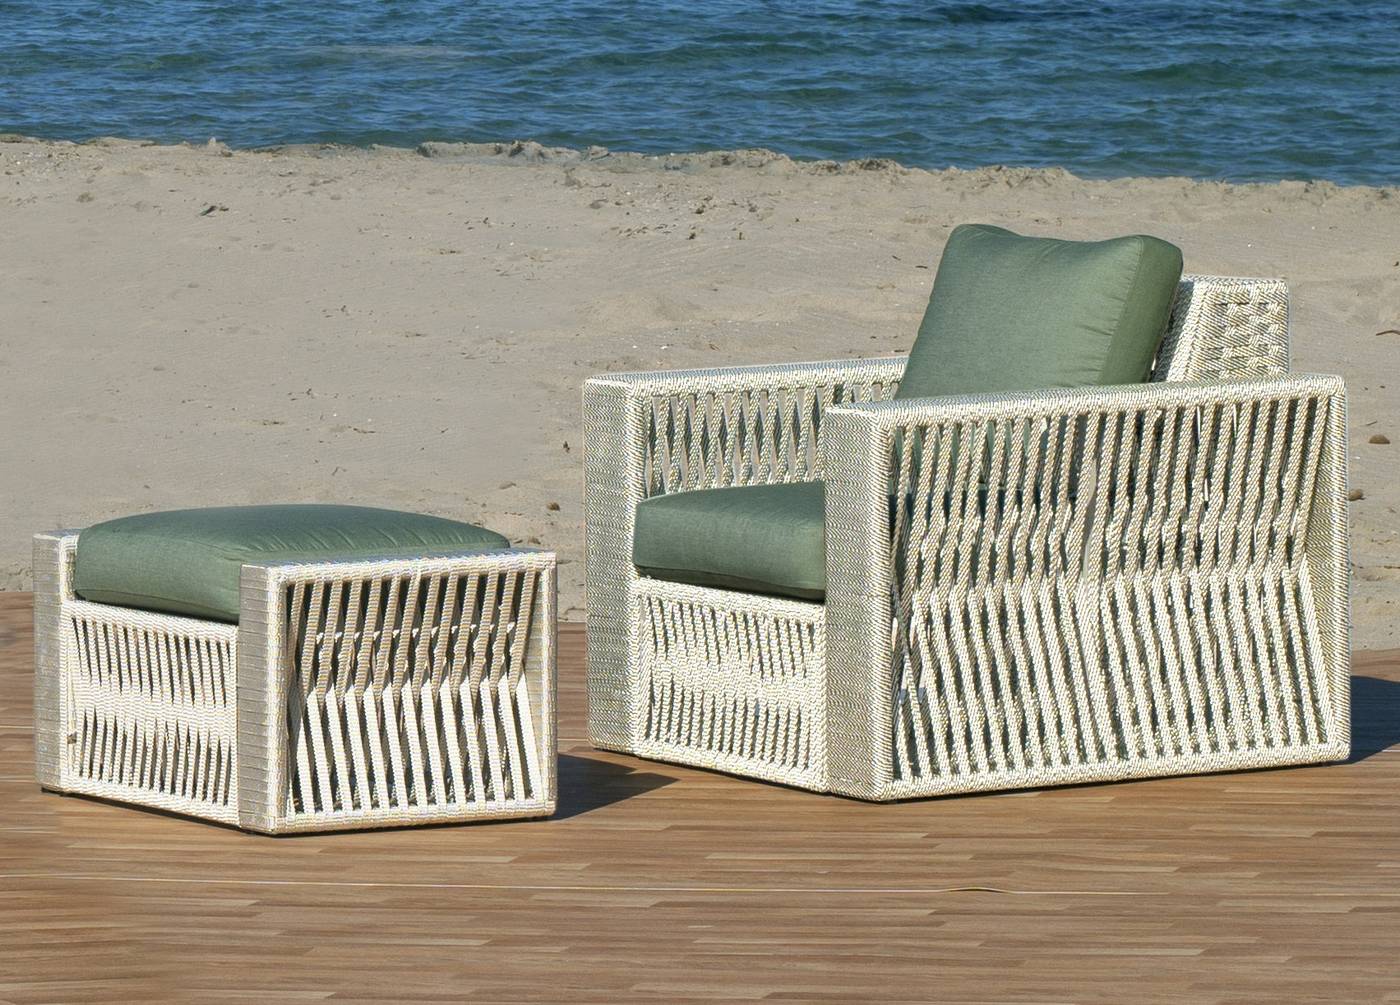 Set Aluminio Prusia-7 - Conjunto aluminio-cuerda: 1 sofá de 2 plazas + 2 sillones + 1 mesa de centro + cojines. Disponible en color blanco, gris, oro o champagne.